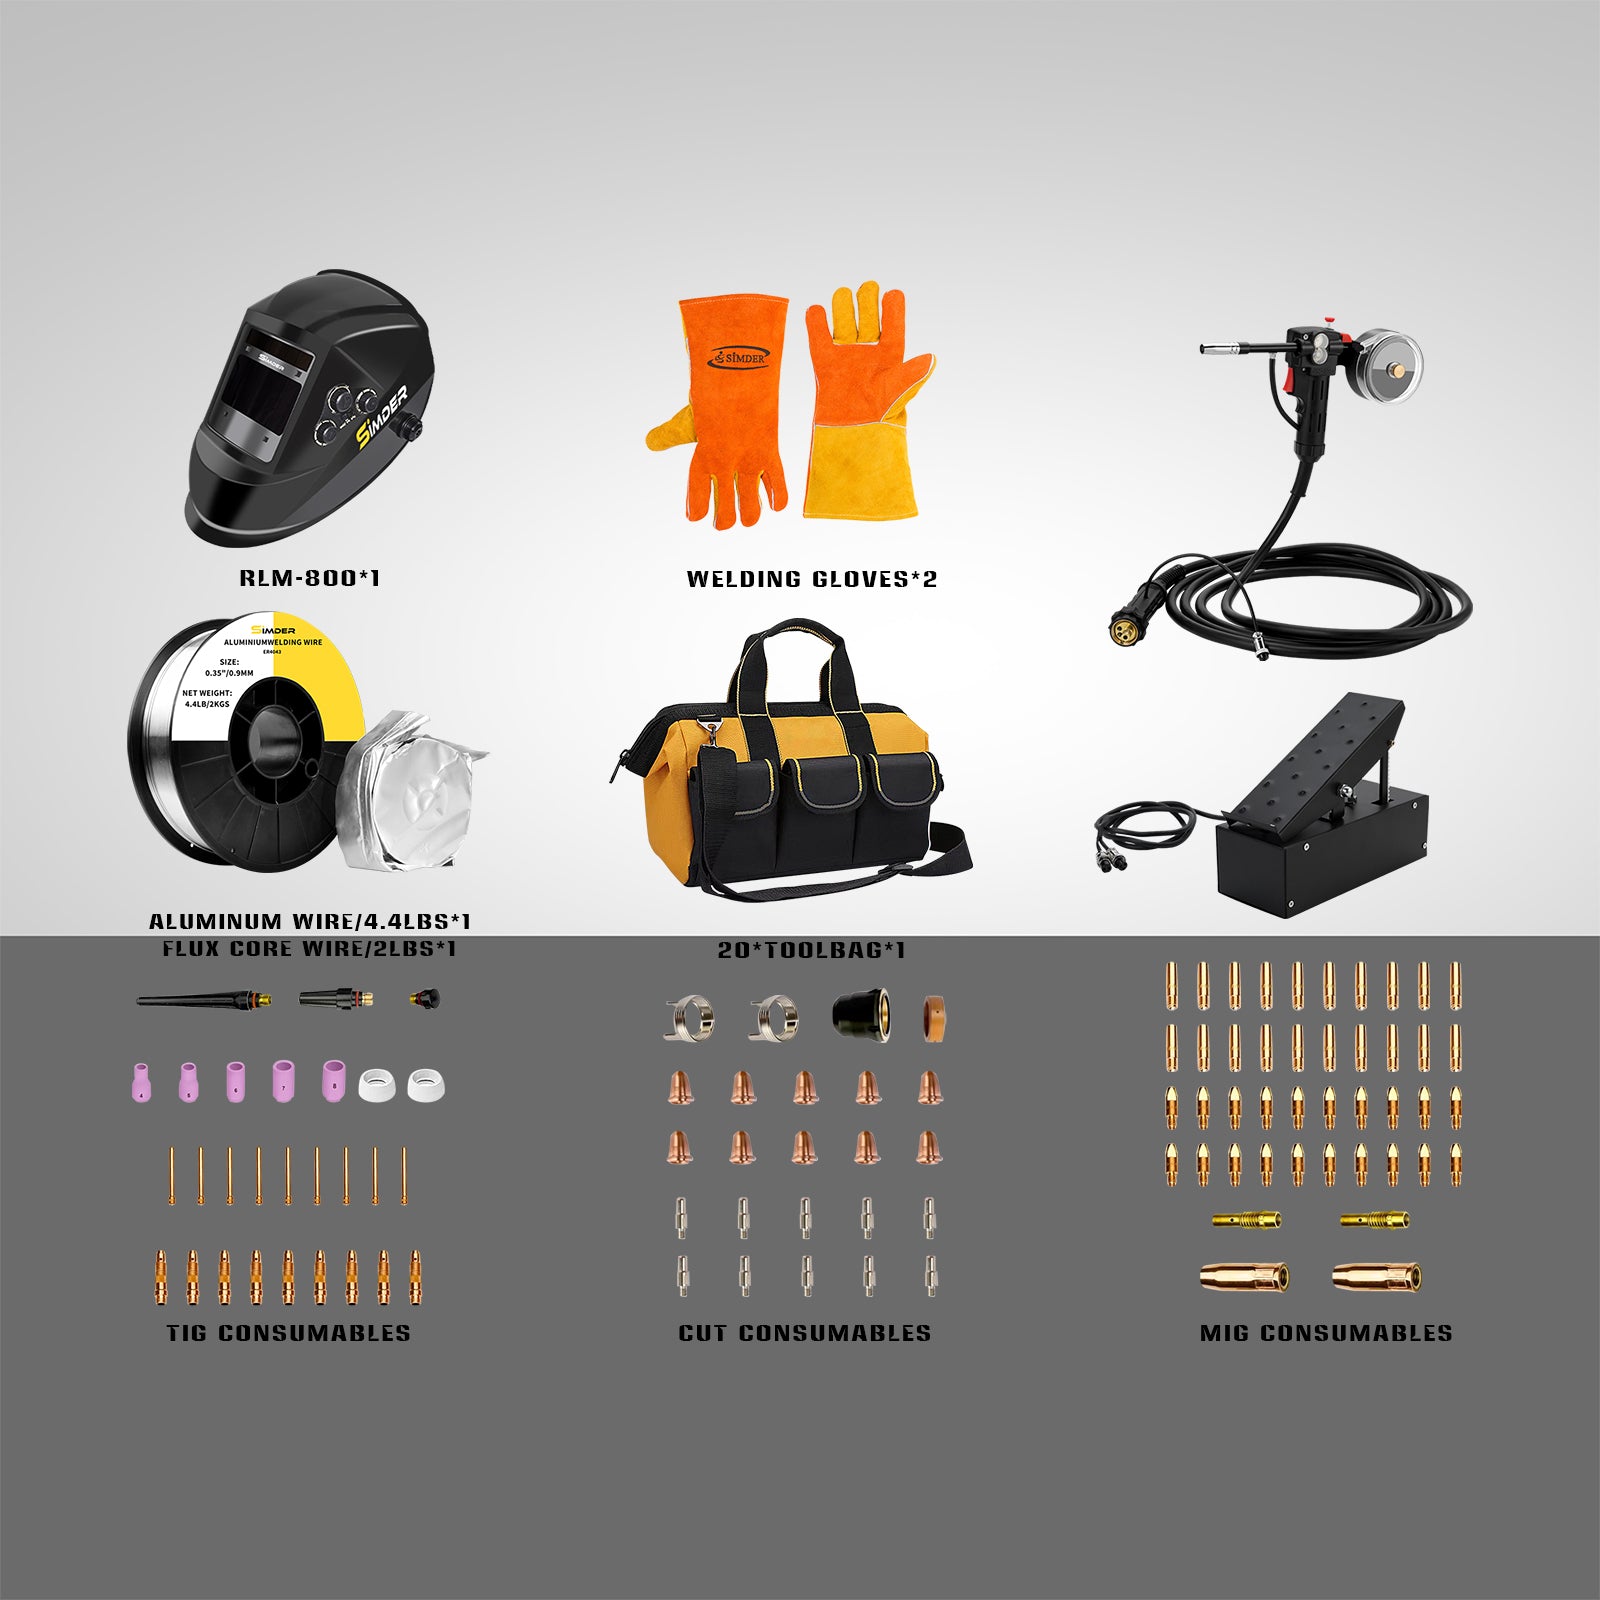 SSimder Luxury Welding Accessories For SD-4050Pro[2024]